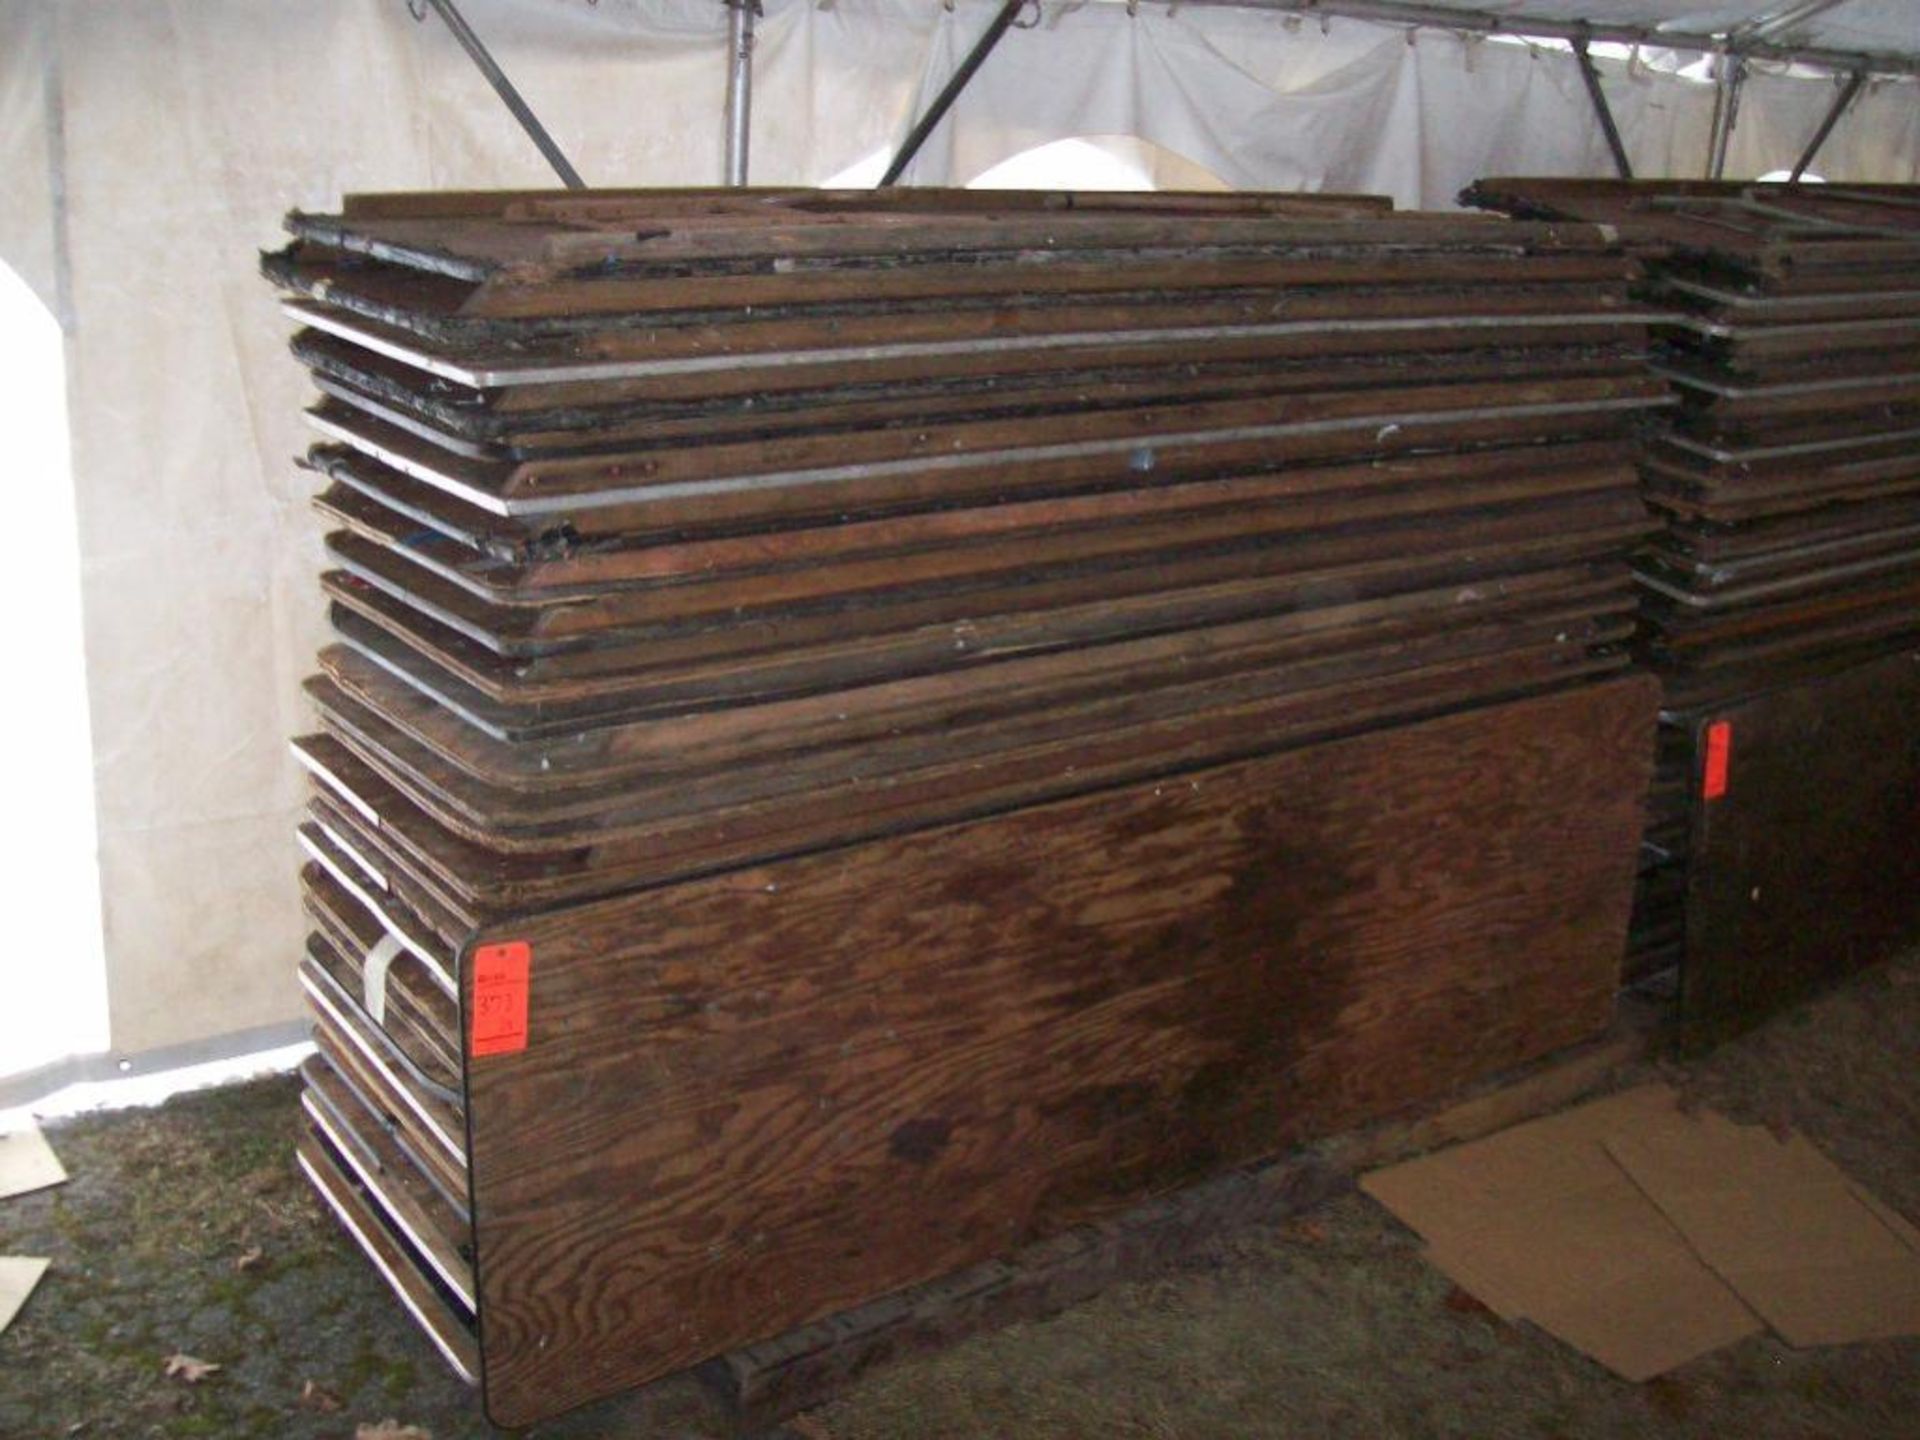 Assorted 8' folding leg wood tables